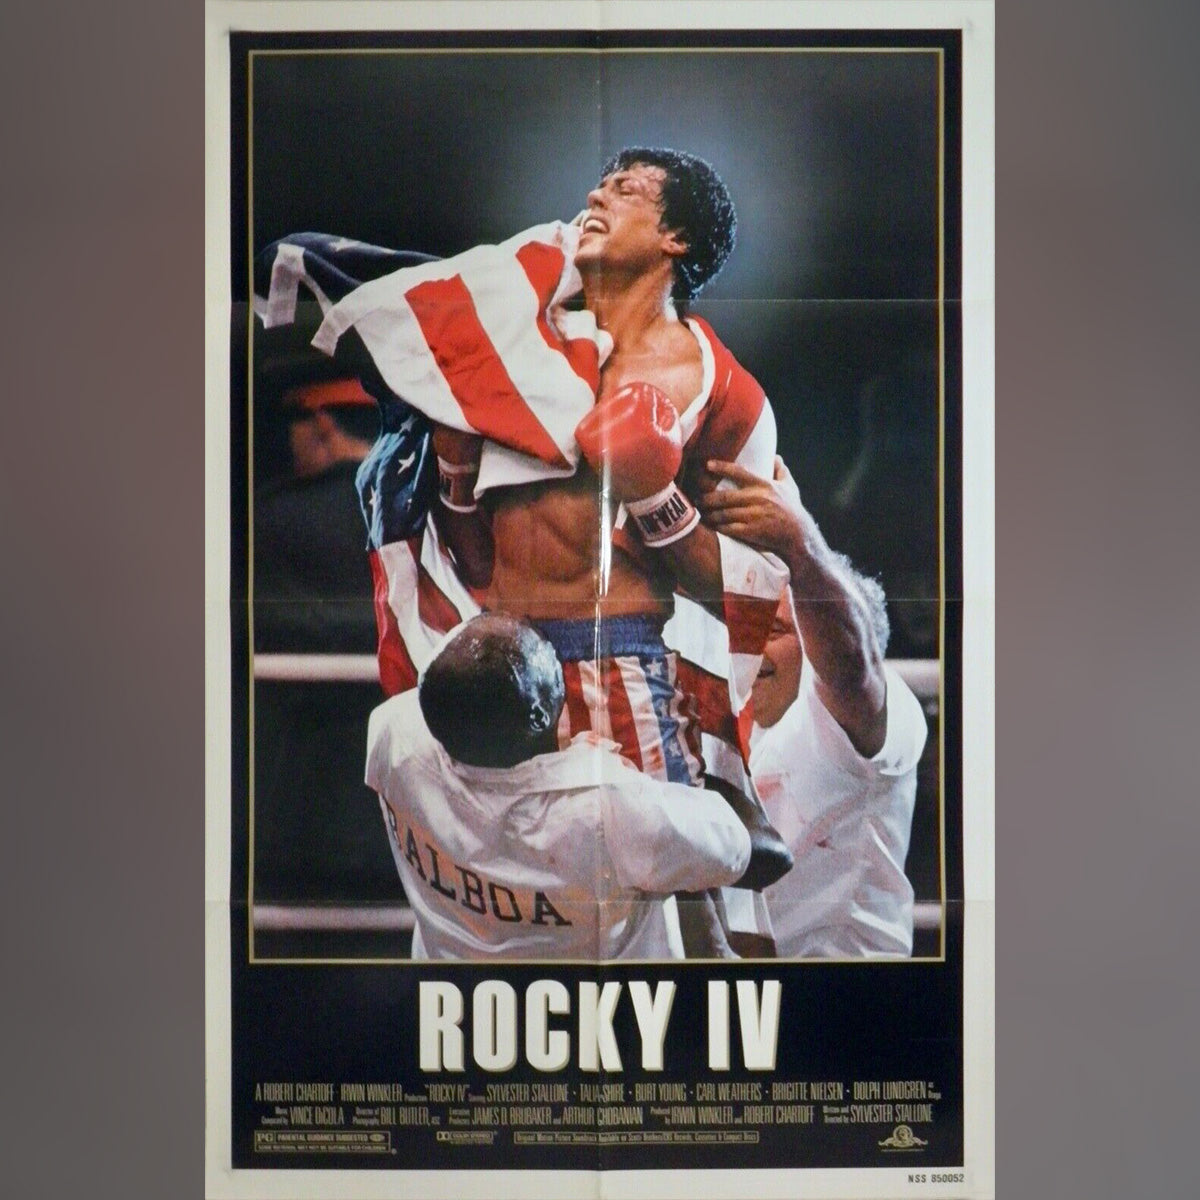 Original Movie Poster of Rocky Iv (1985)